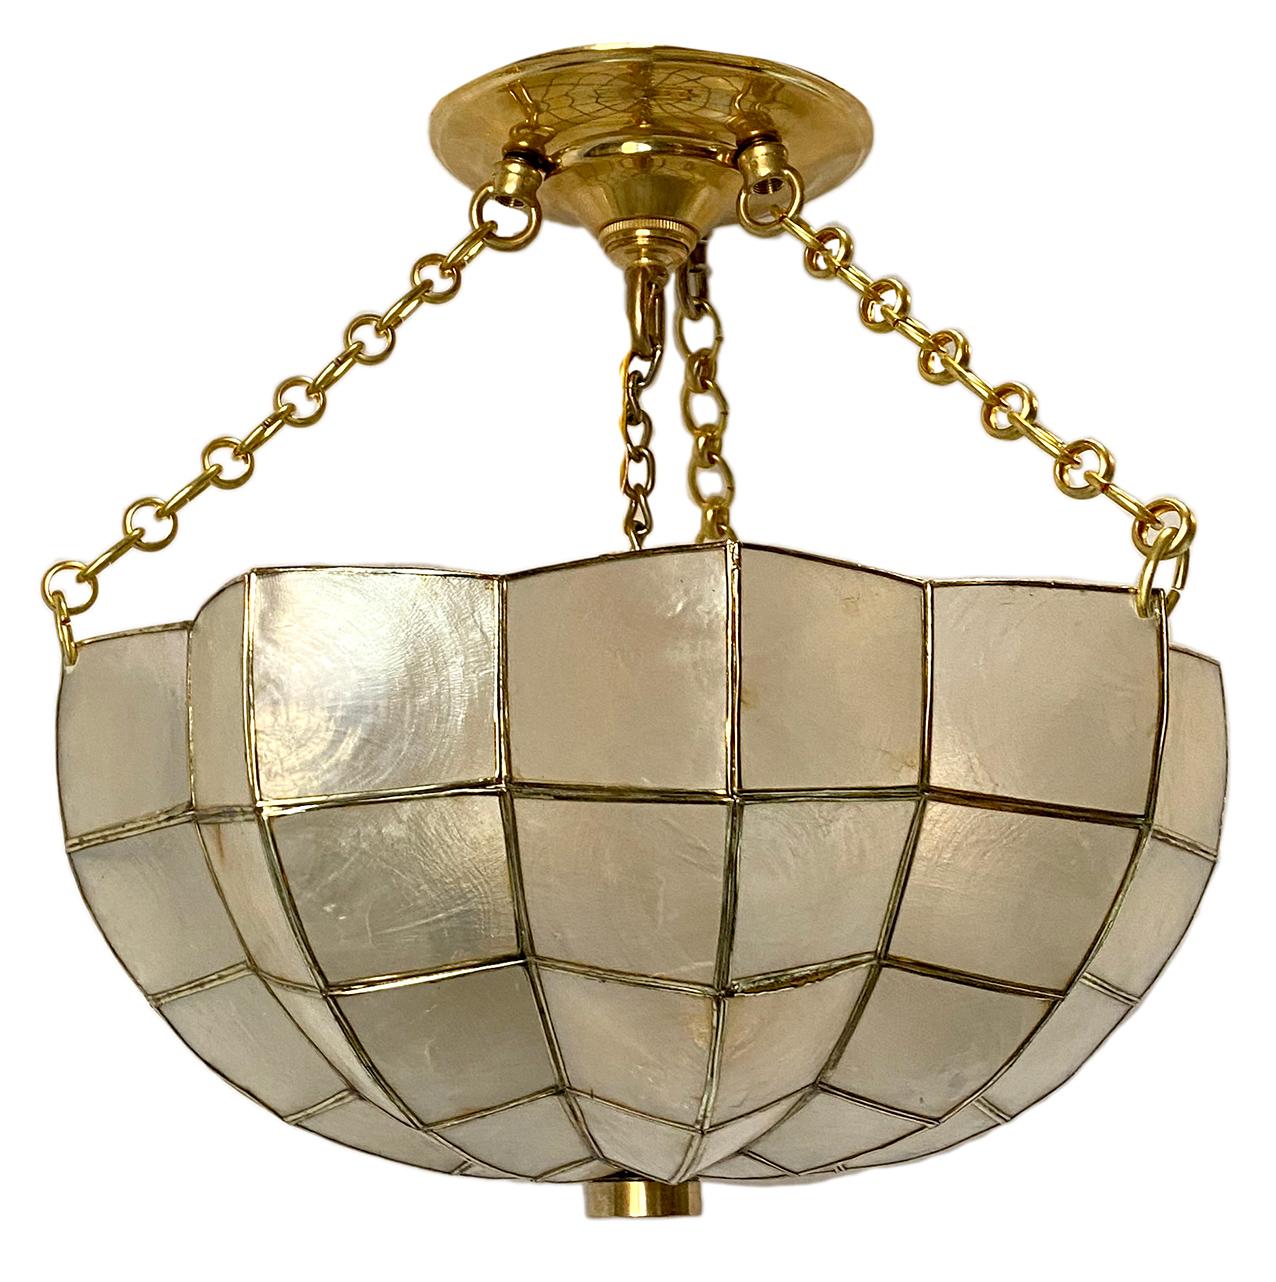 1940s French pendant capiz light fixture with three interior candelabra lights.

Measurements:
Diameter 13.5